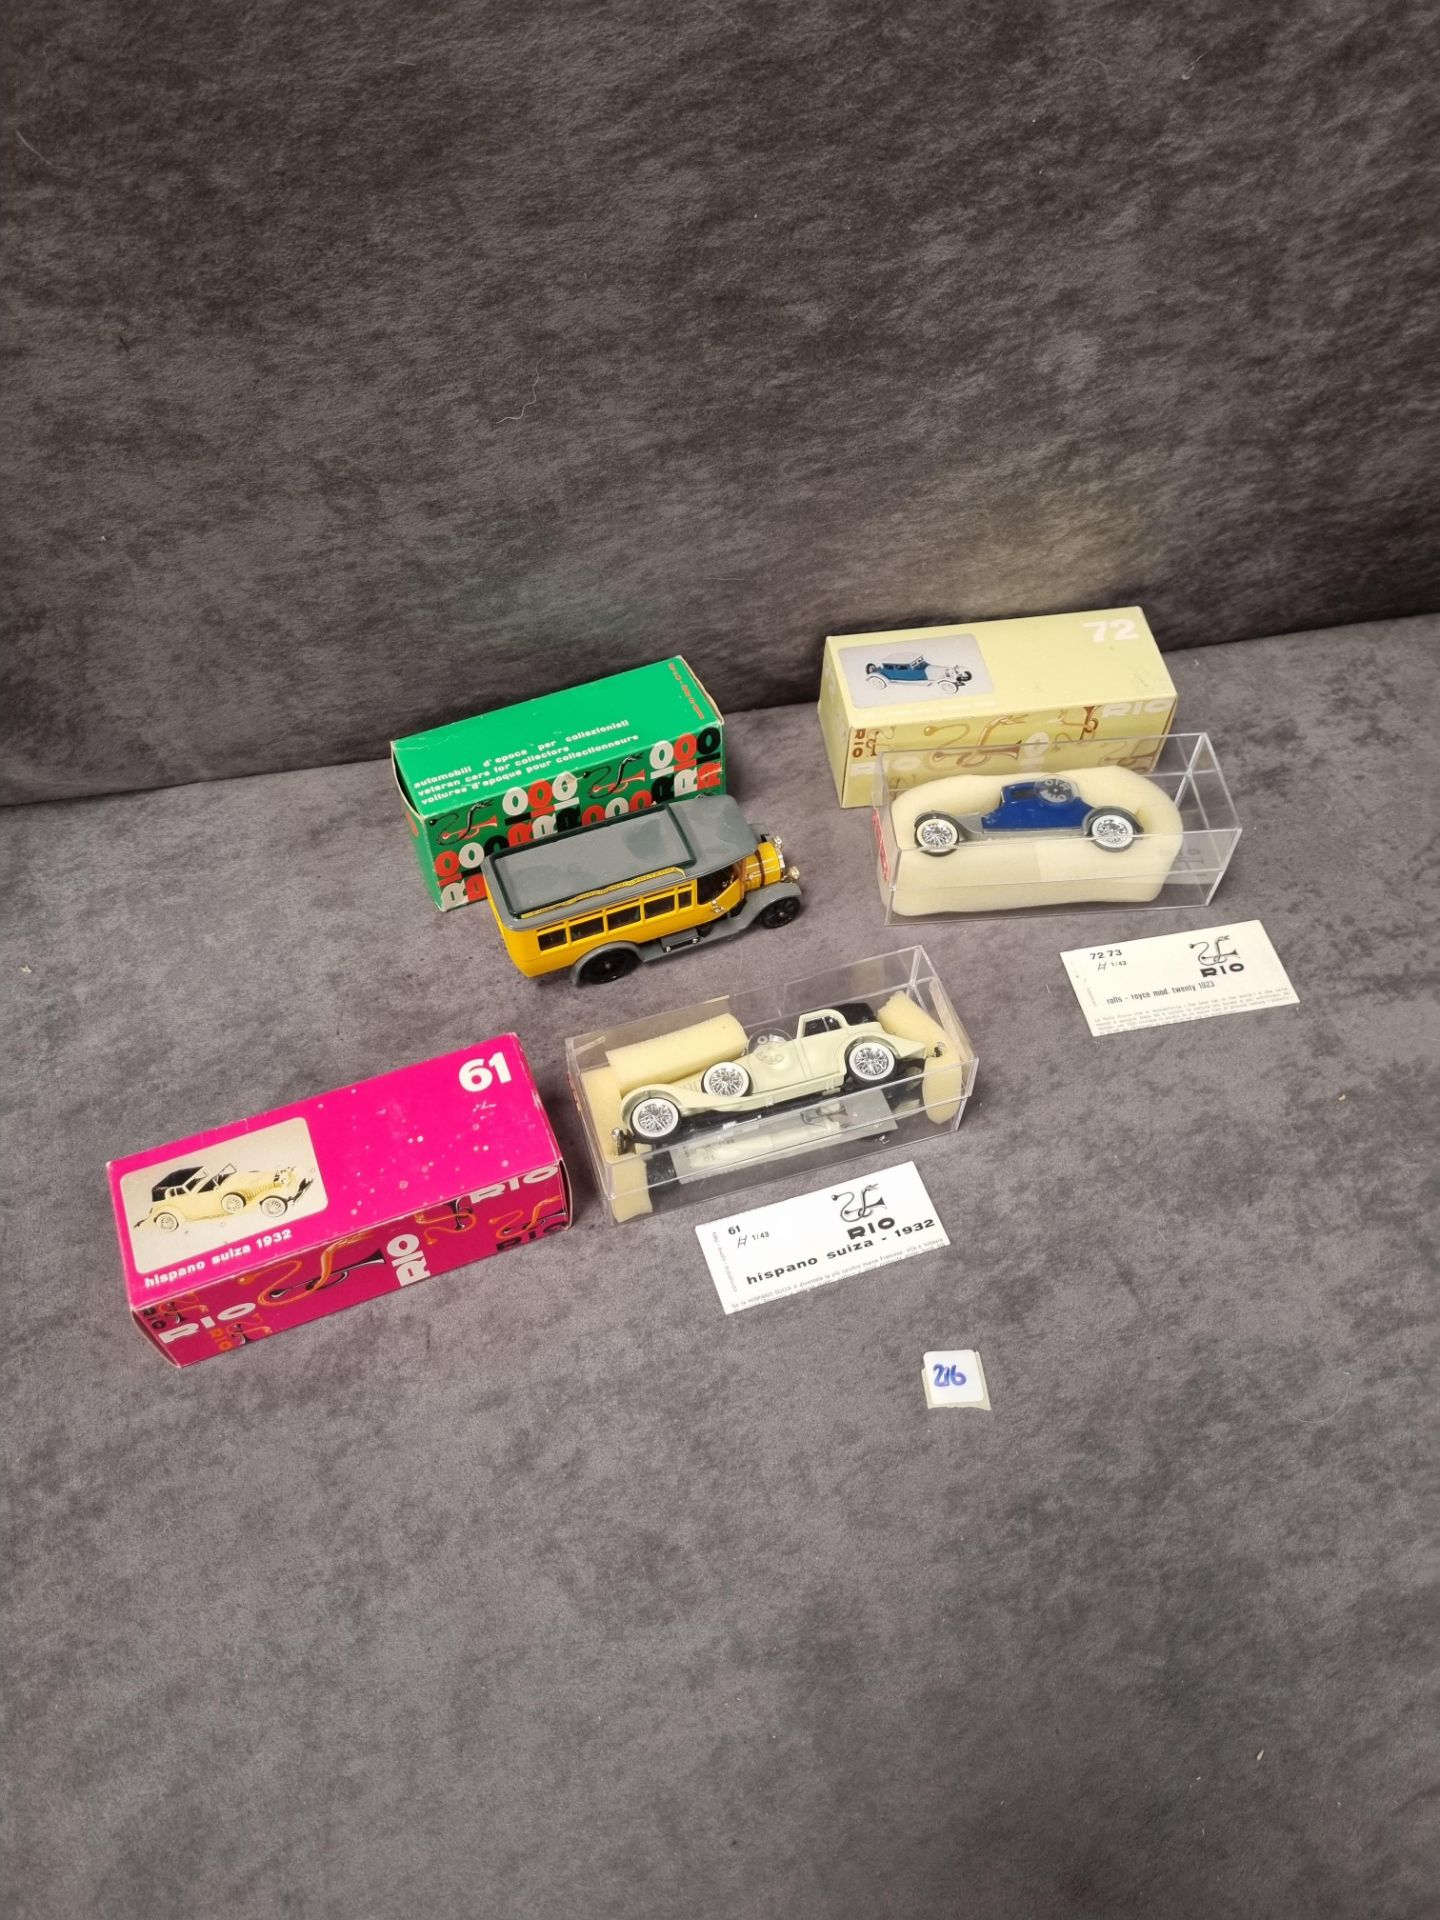 3x Rio Diecast Cars in boxes, comprising of; #20 19*15 fiat omnibus 18 BL, #61 Hispano suiza